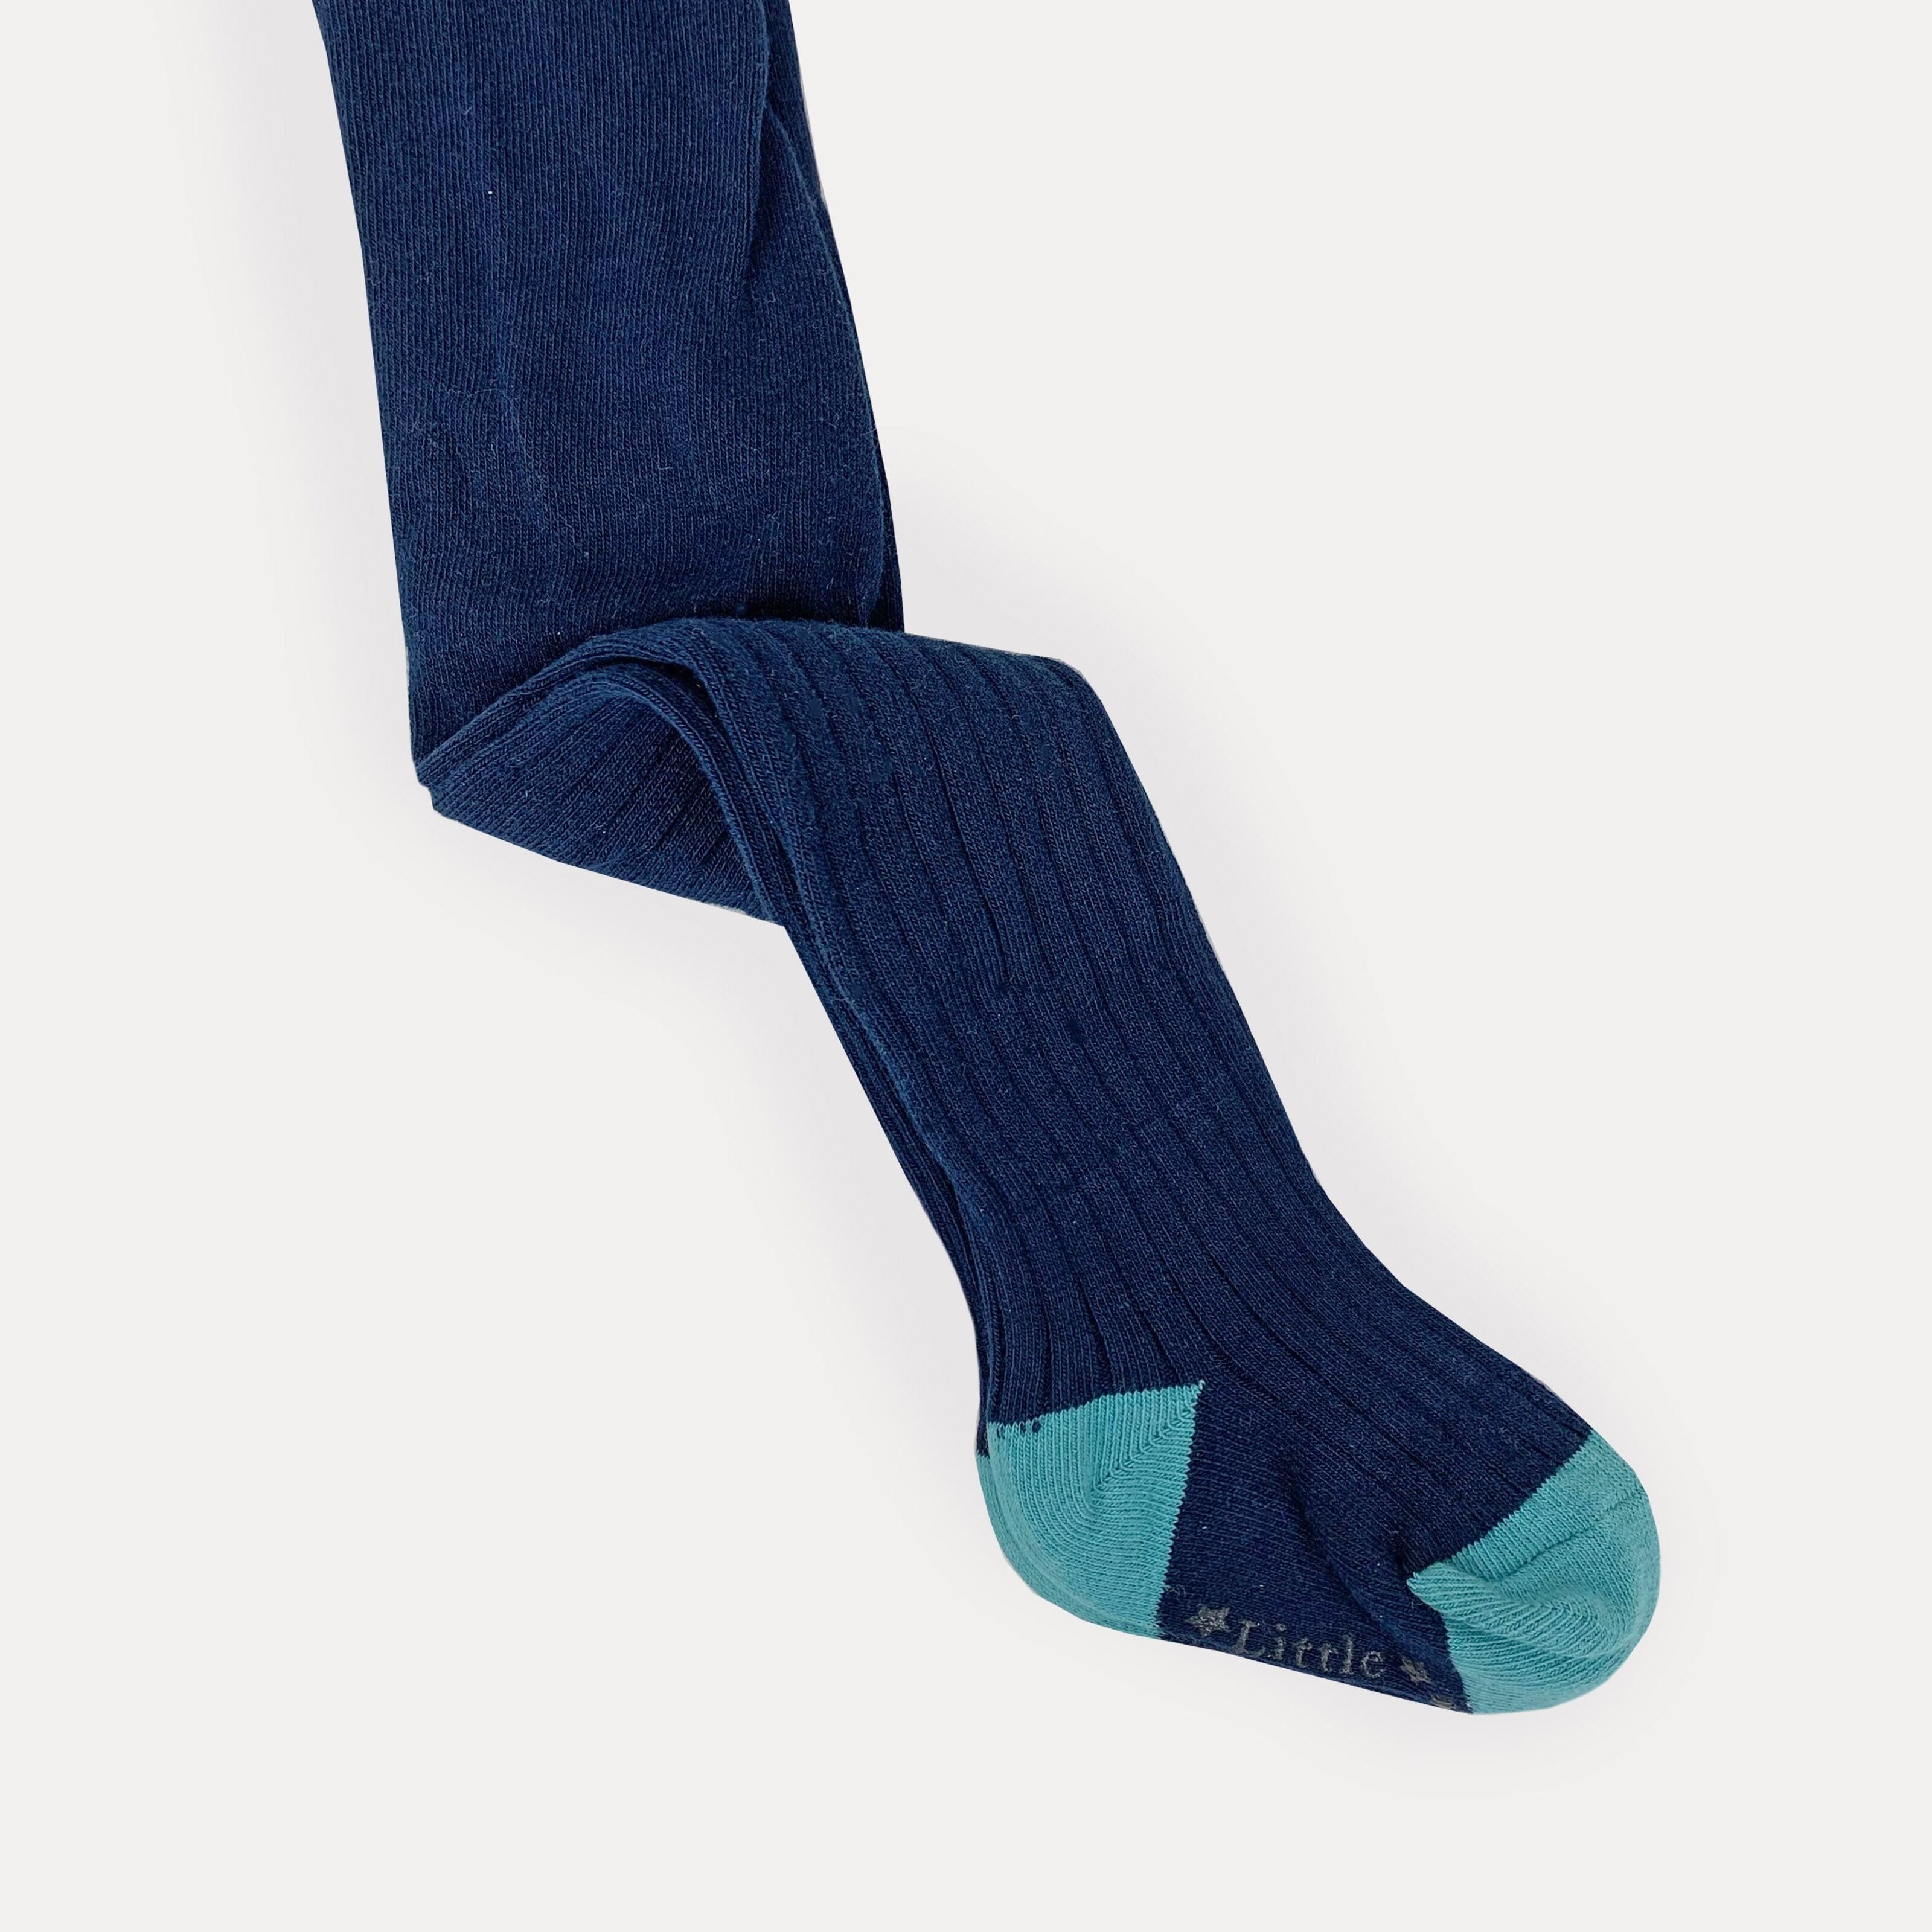 F21201 _ 4 sets of blue soft socks, Non-Slip Socks